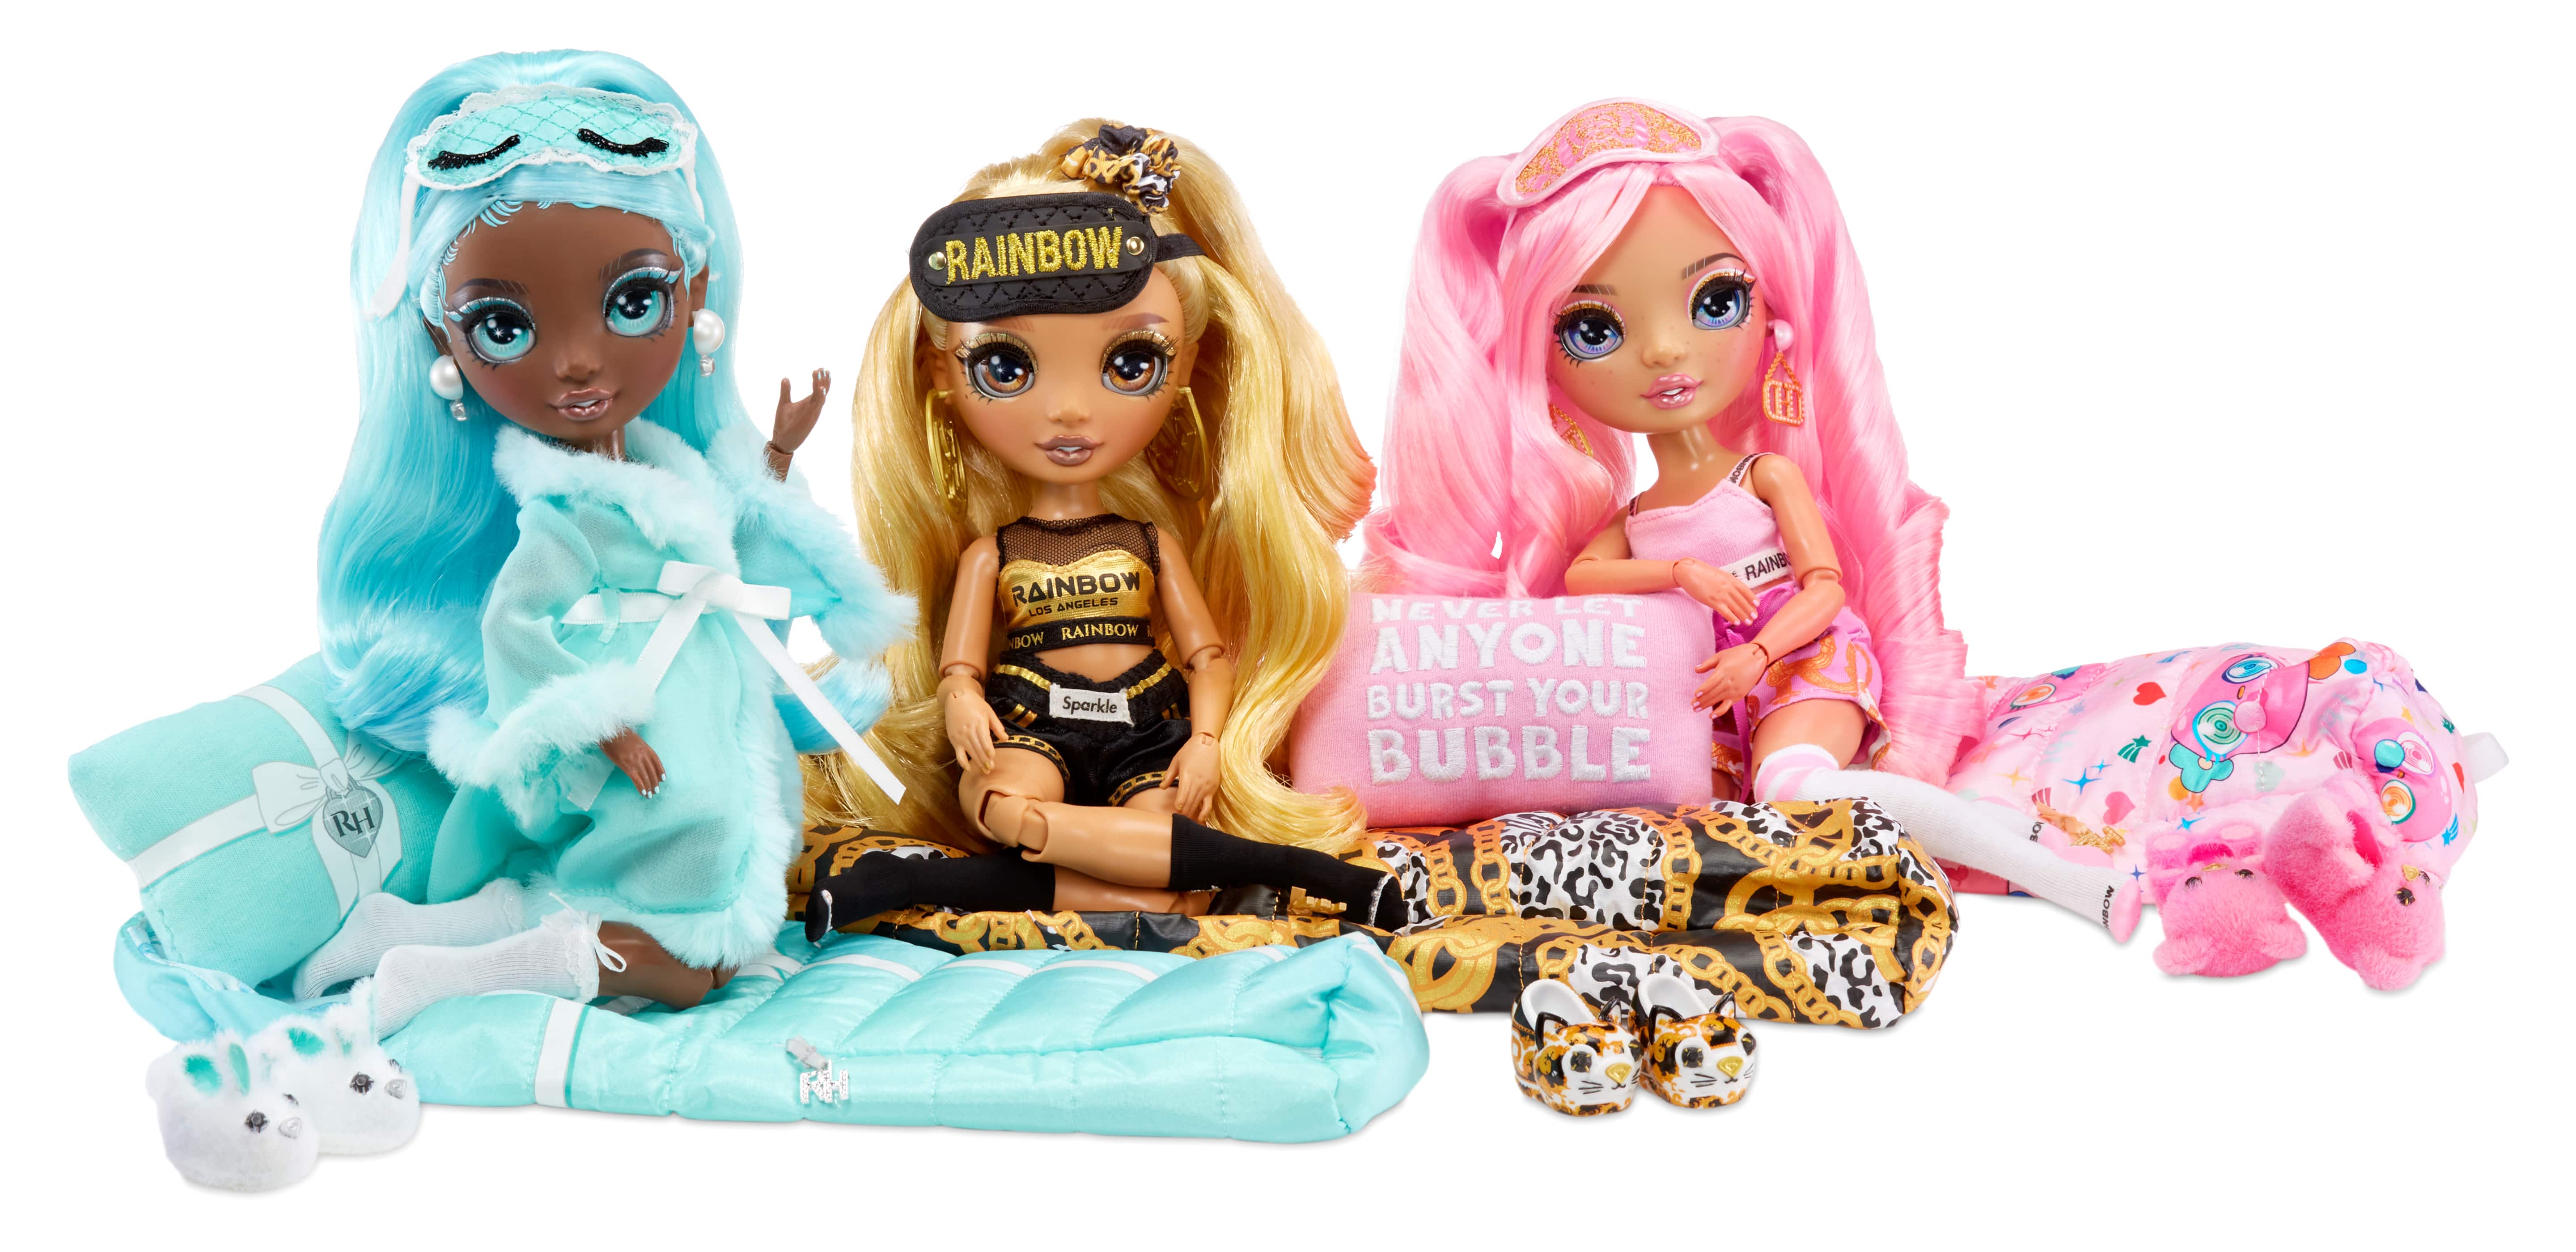 Rainbow High Slumber Party dolls: Marisa Golding, Brianna Dulce